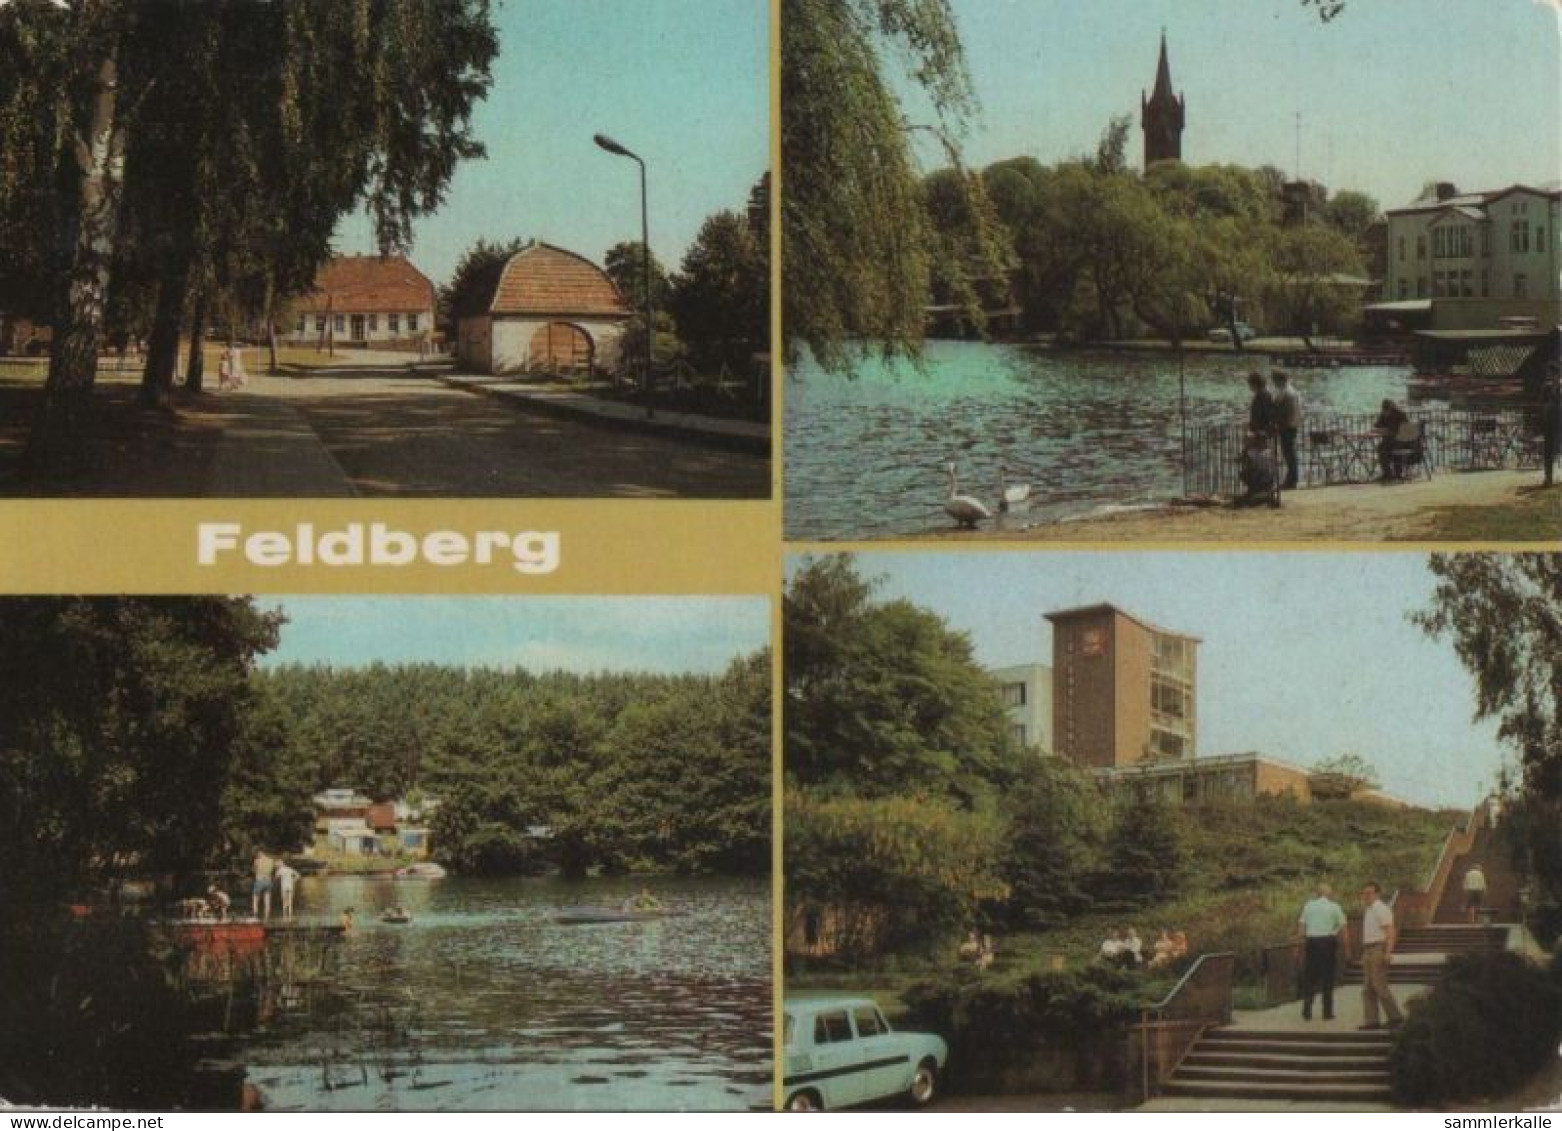 39026 - Feldberg, Feldberger Seenlandschaft - U.a. Amtsplatz - 1987 - Feldberg